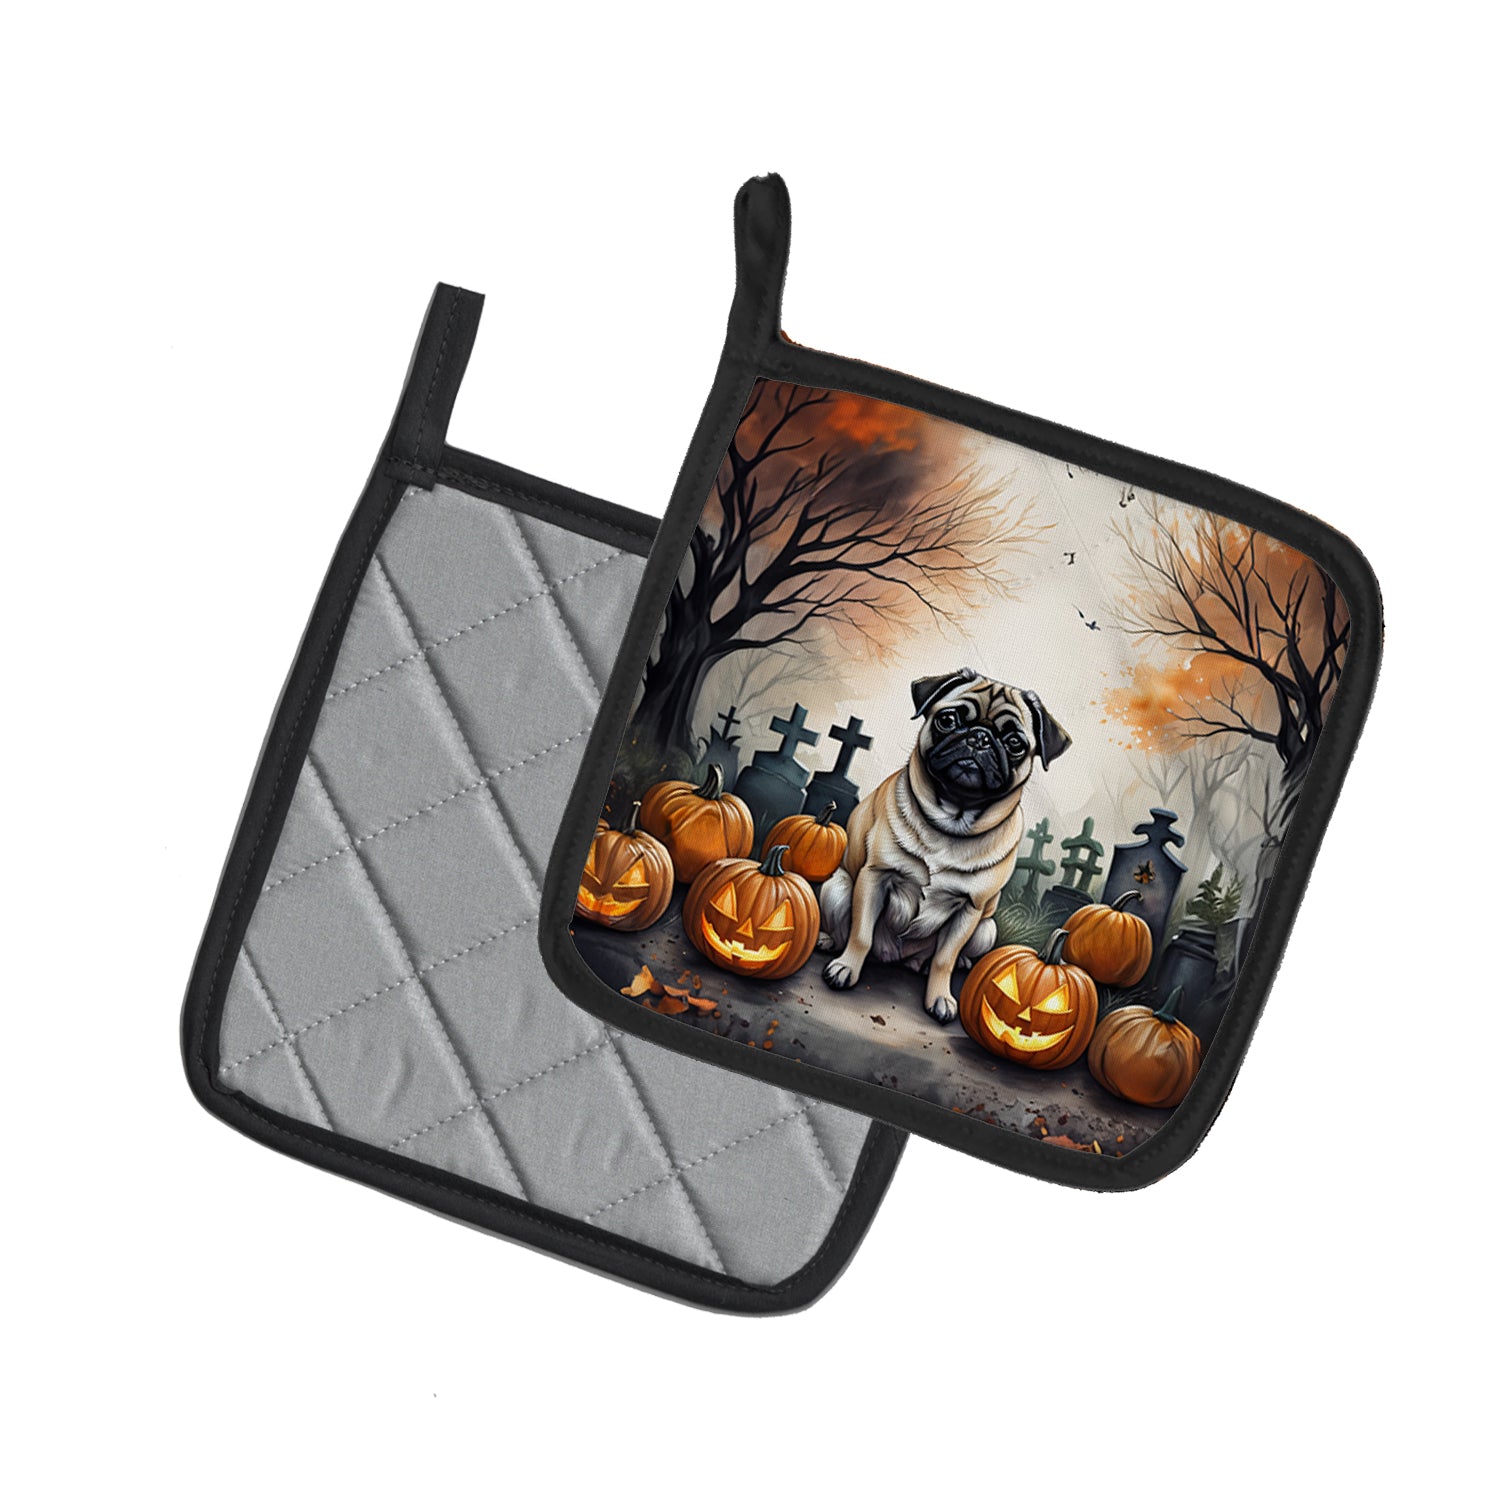 Fawn Pug Spooky Halloween Pair of Pot Holders